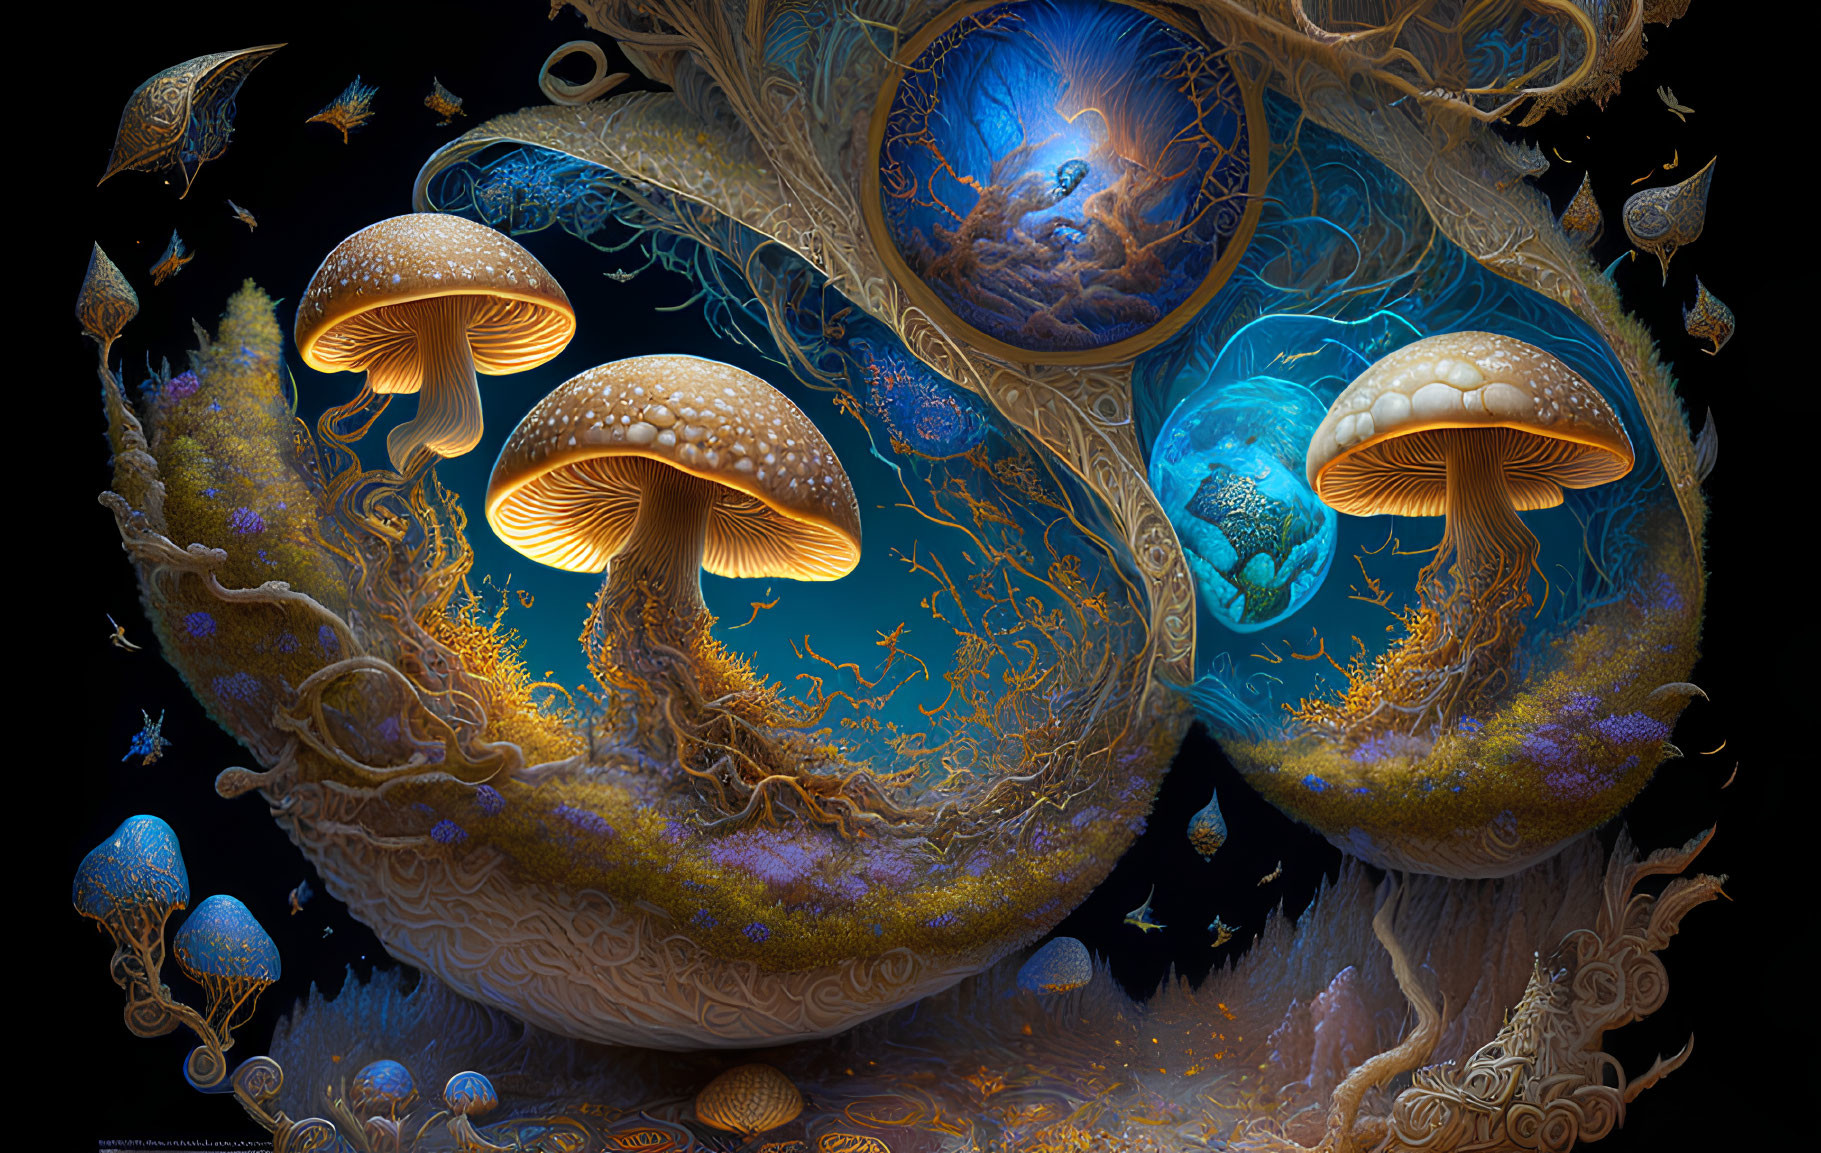 Fantasy Artwork: Luminescent Mushrooms in Cosmic Setting